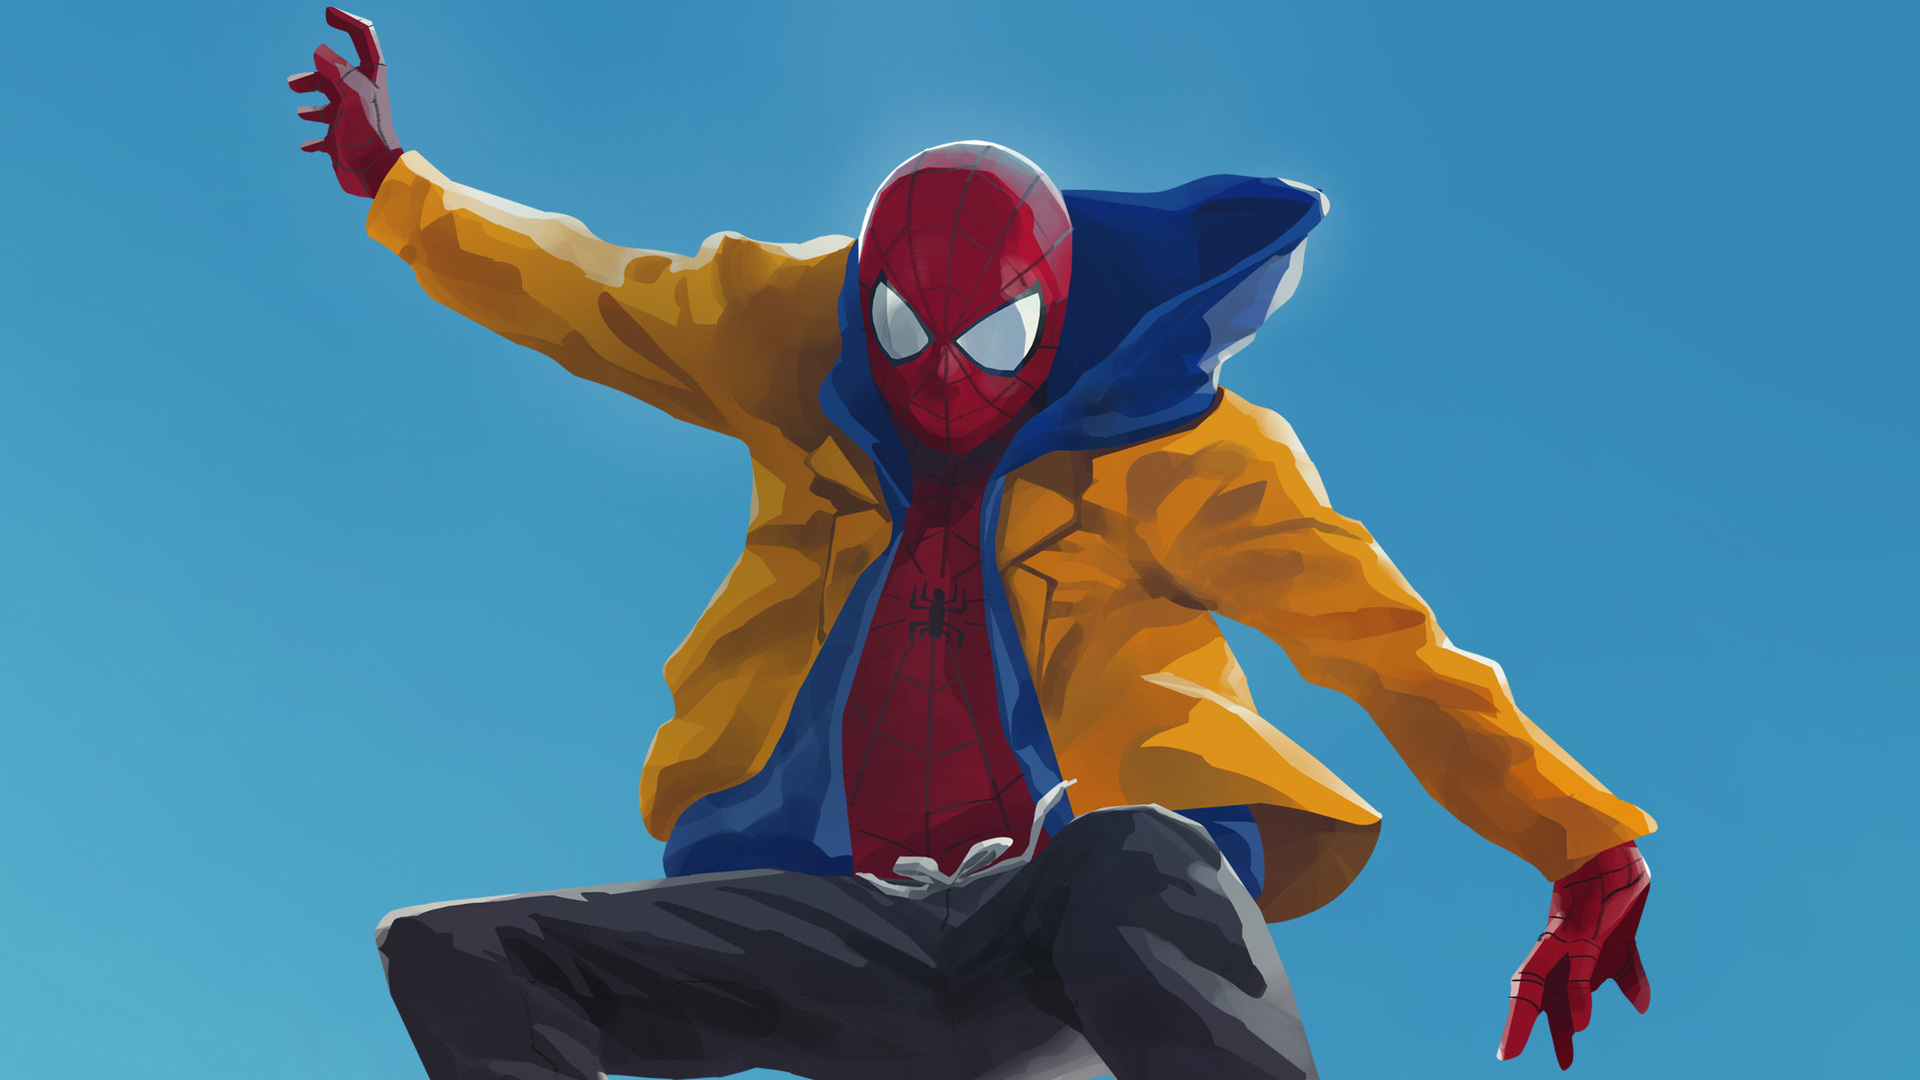 SpiderMan Into The Spider Verse Digital Artwork, HD Superheroes, 4k ...